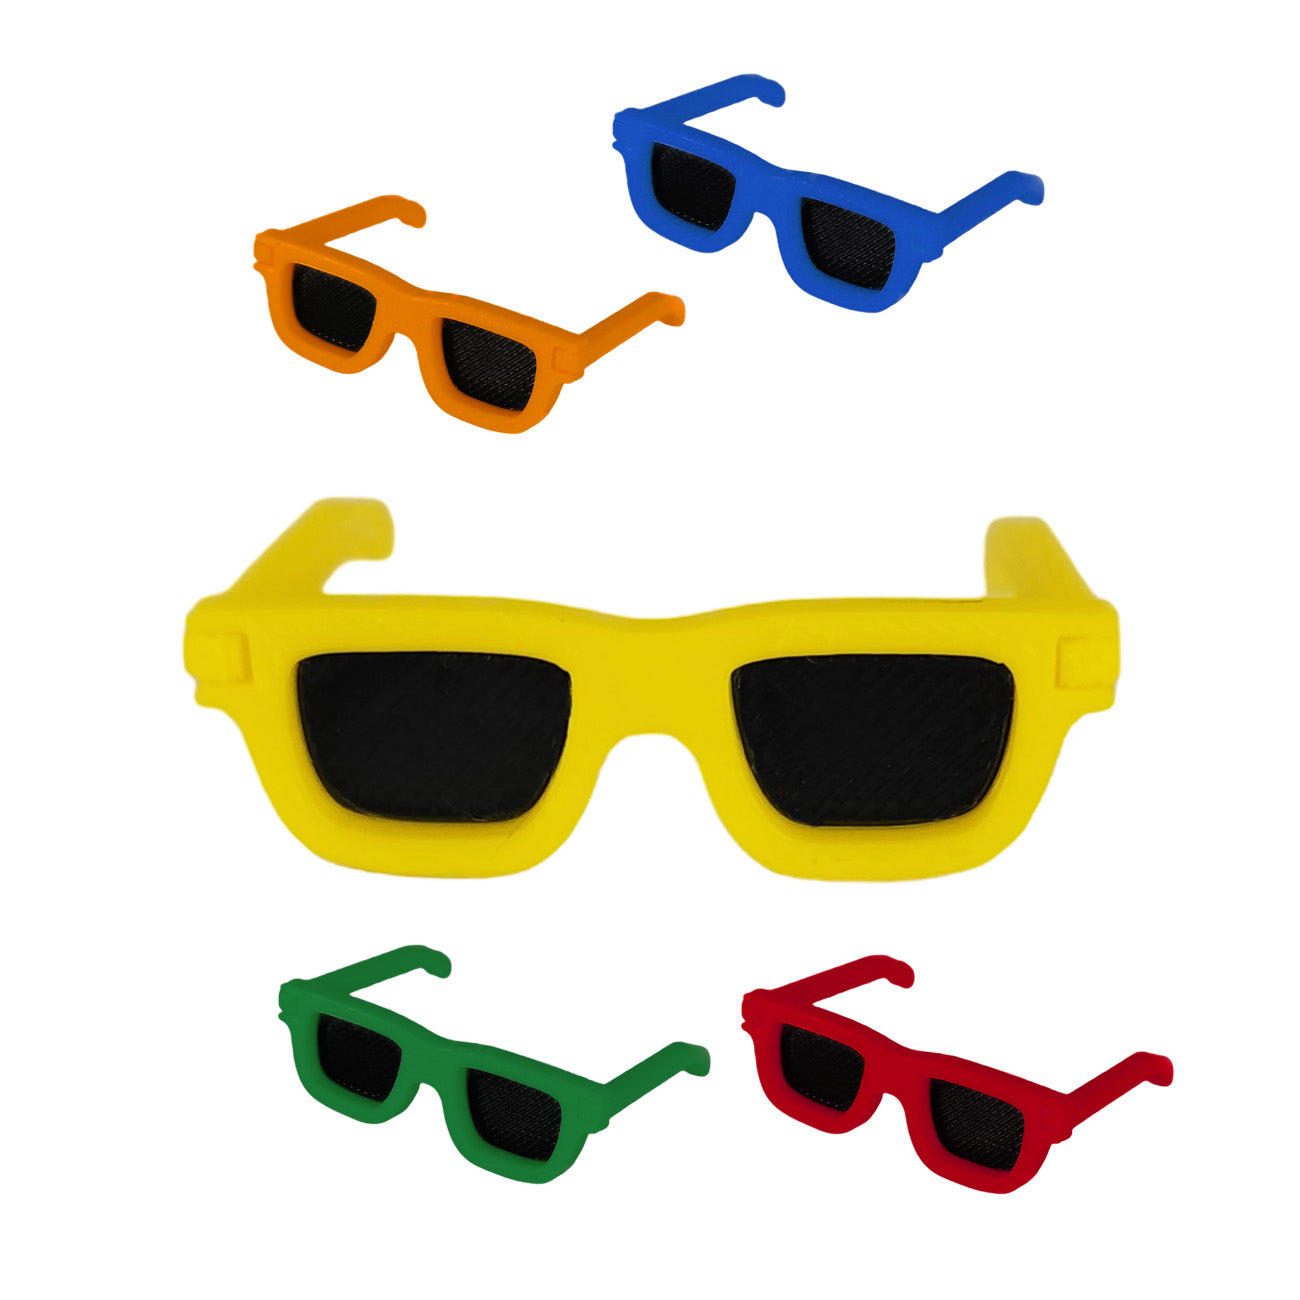 Elf sunglasses mutiple coloursElf sunglasses mutiple colours